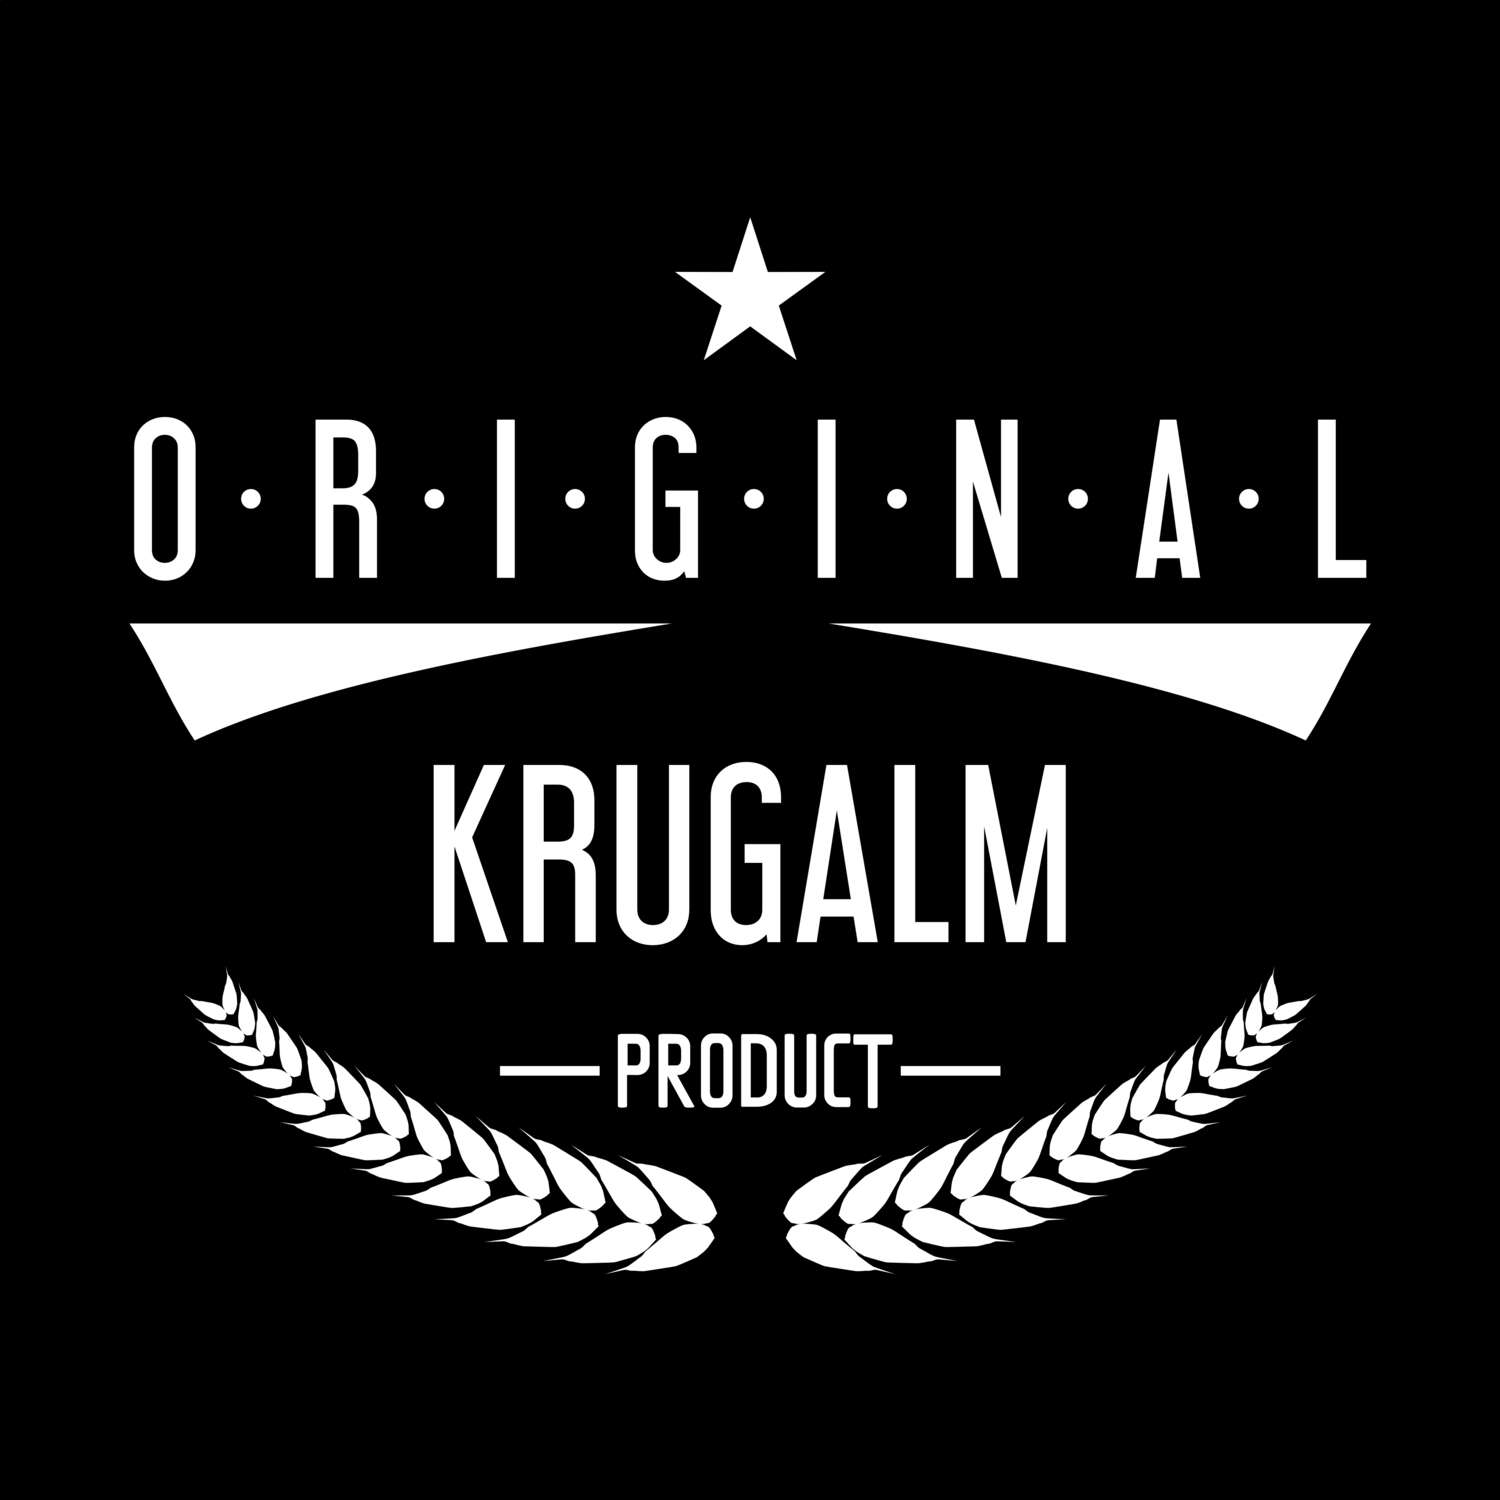 Krugalm T-Shirt »Original Product«